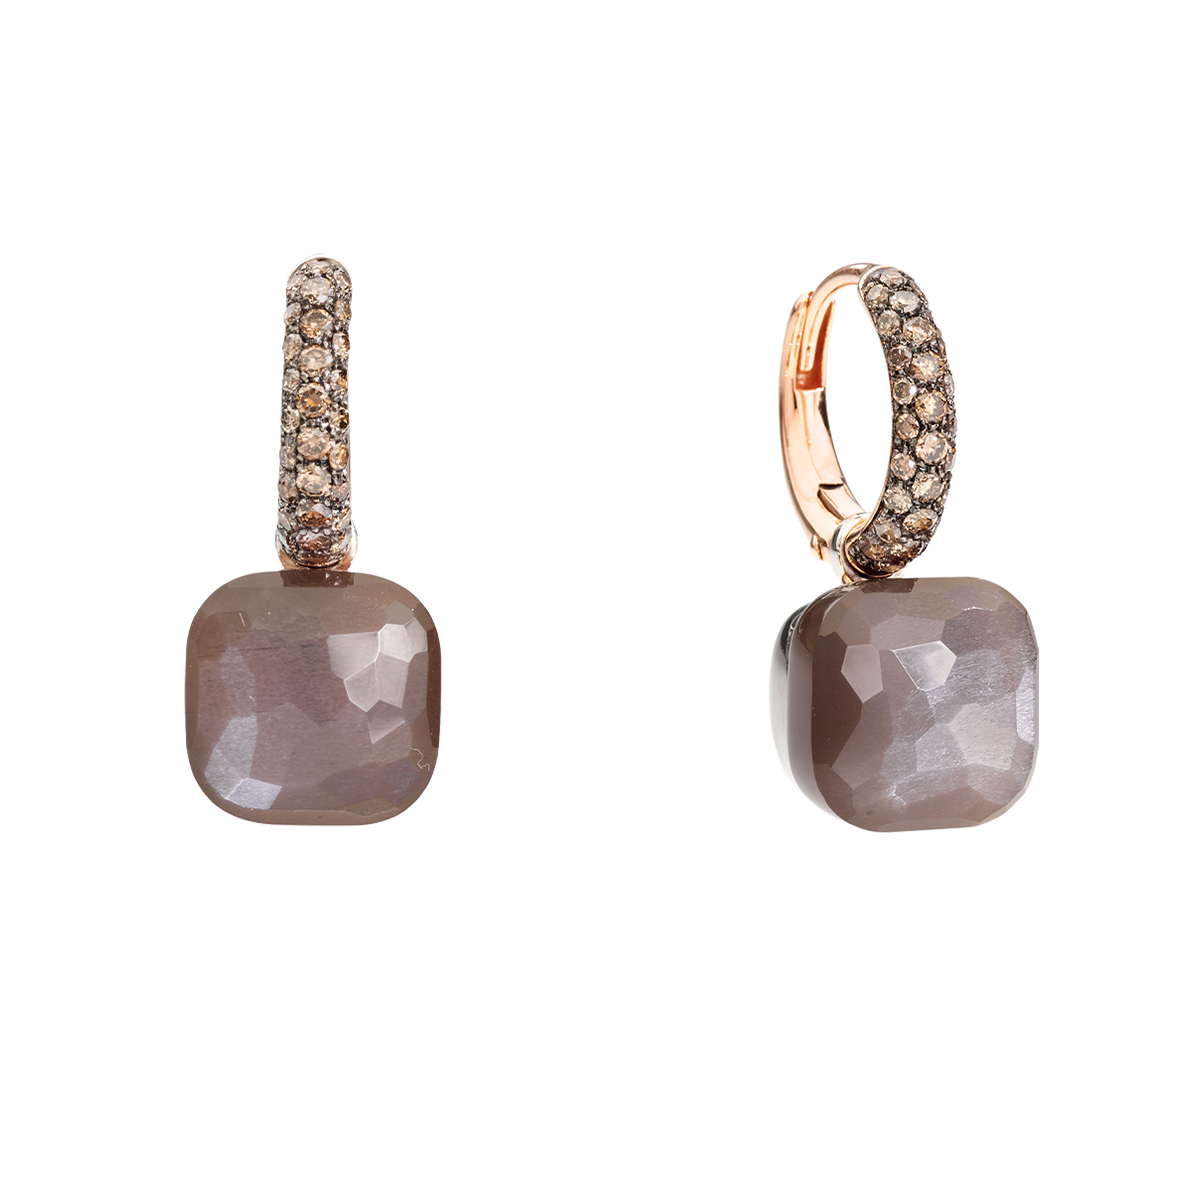 Pomellato Nudo moonstone earrings